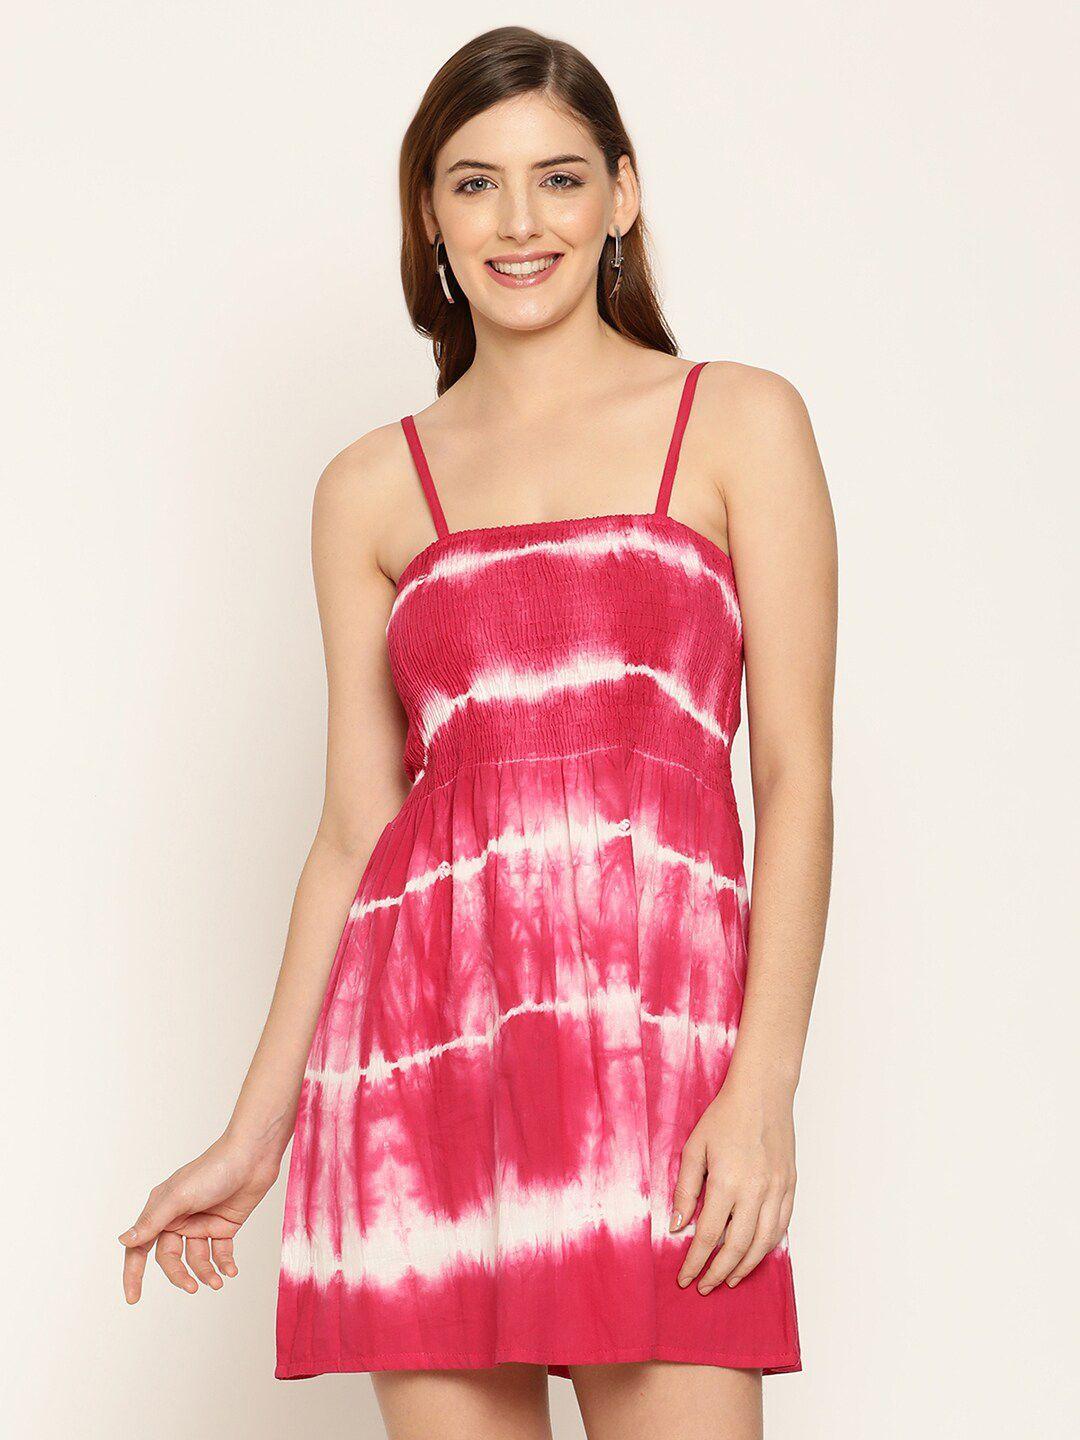 baesd pink dress